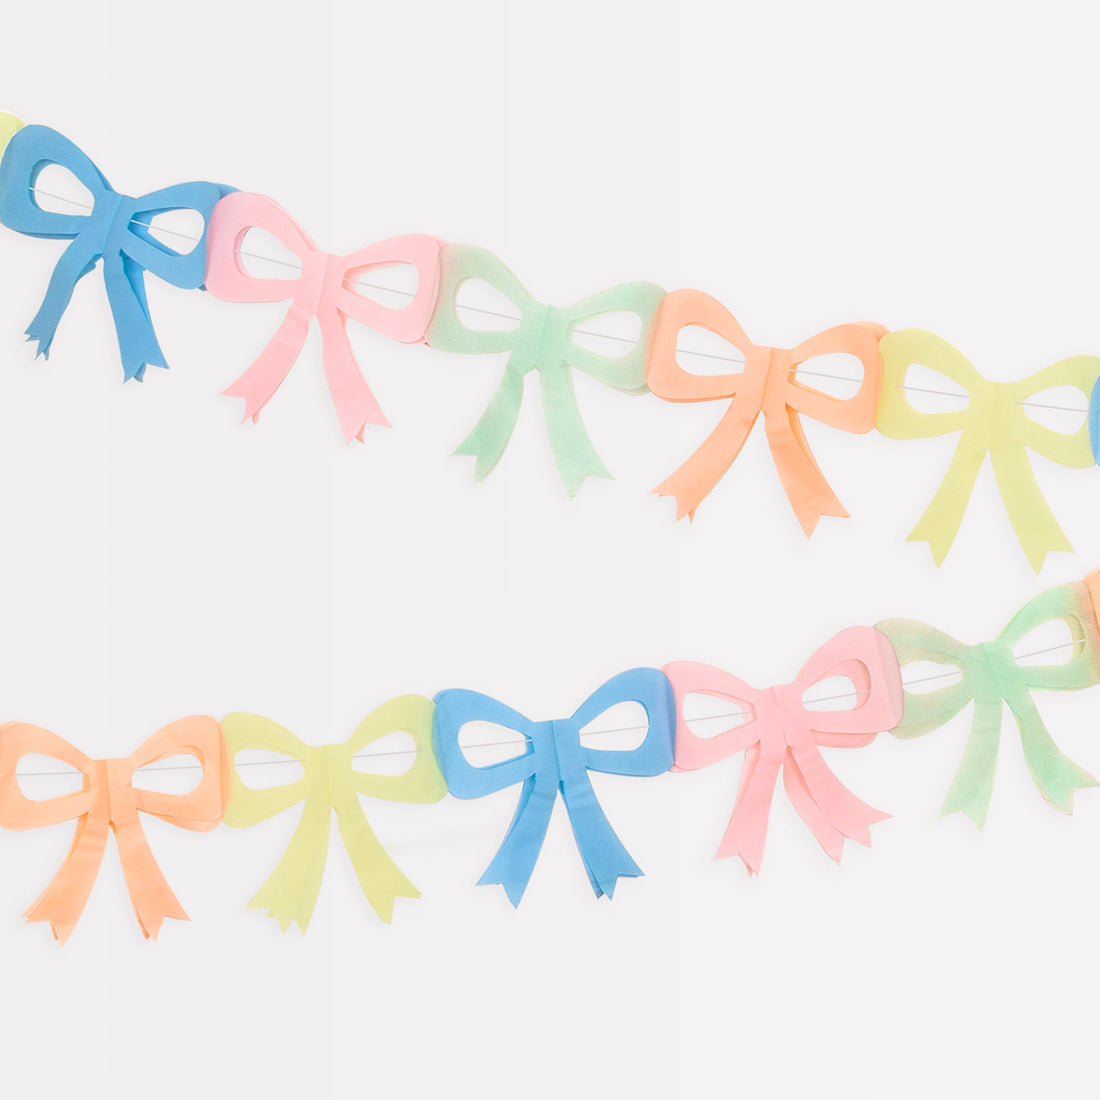 Colorful Meri Meri tissue paper bow garland on a white background.